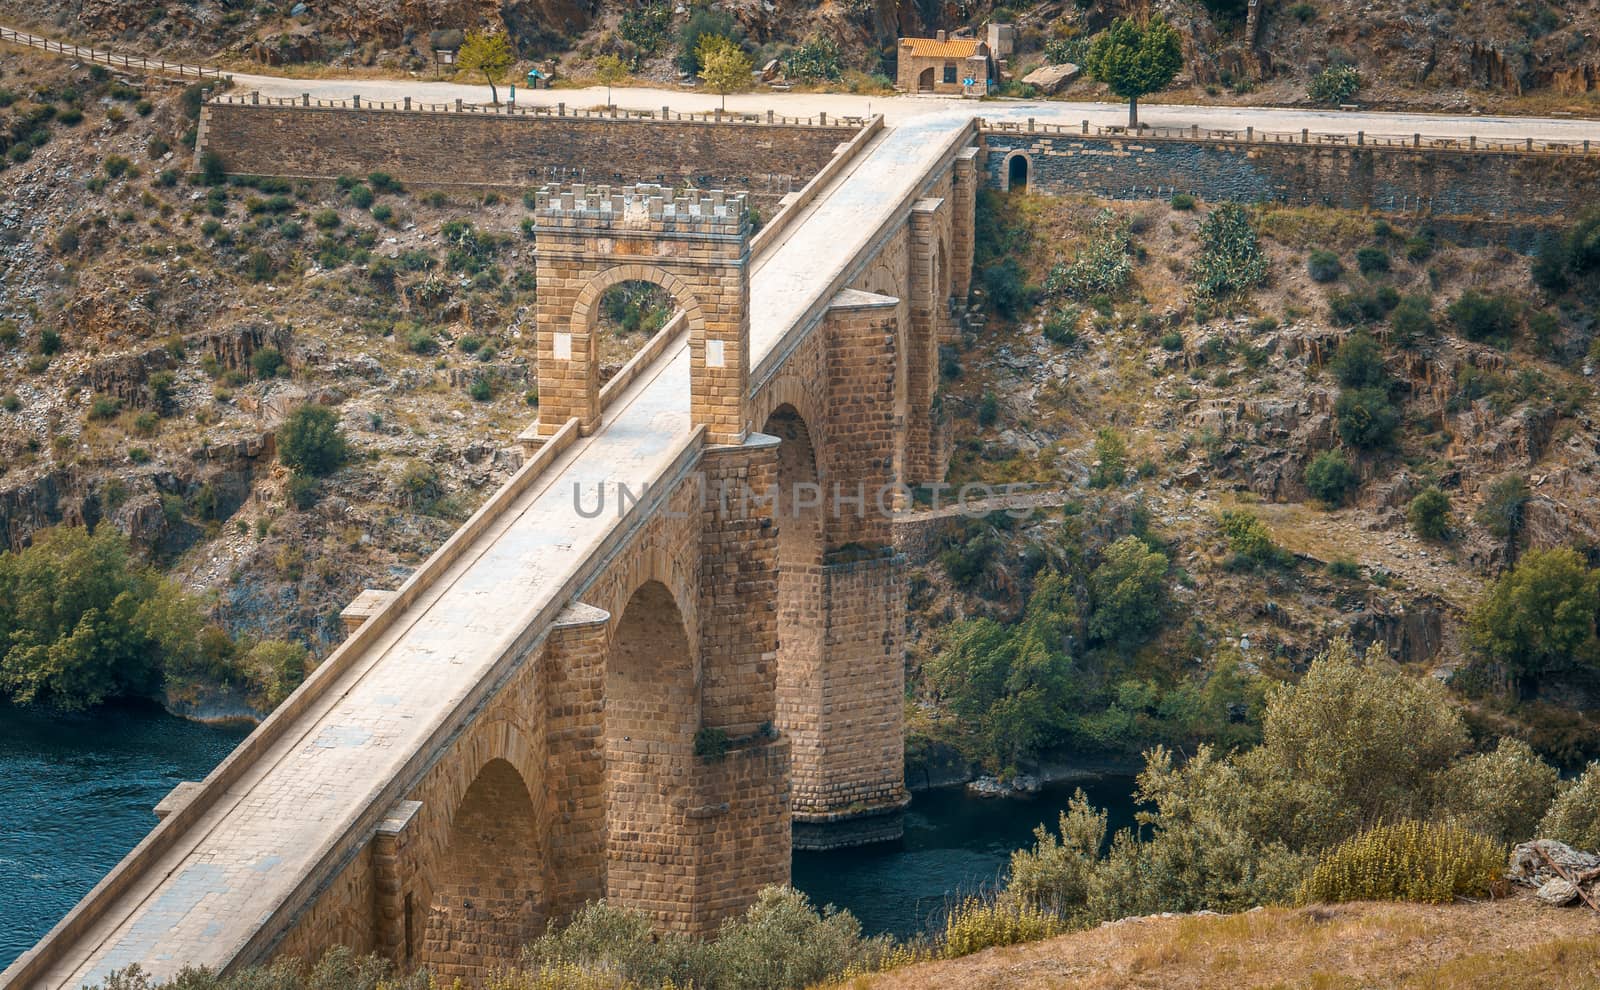 Roman bridge over the Tajo river in Alcantara, Caceres province,Extremadura, Spain by tanaonte